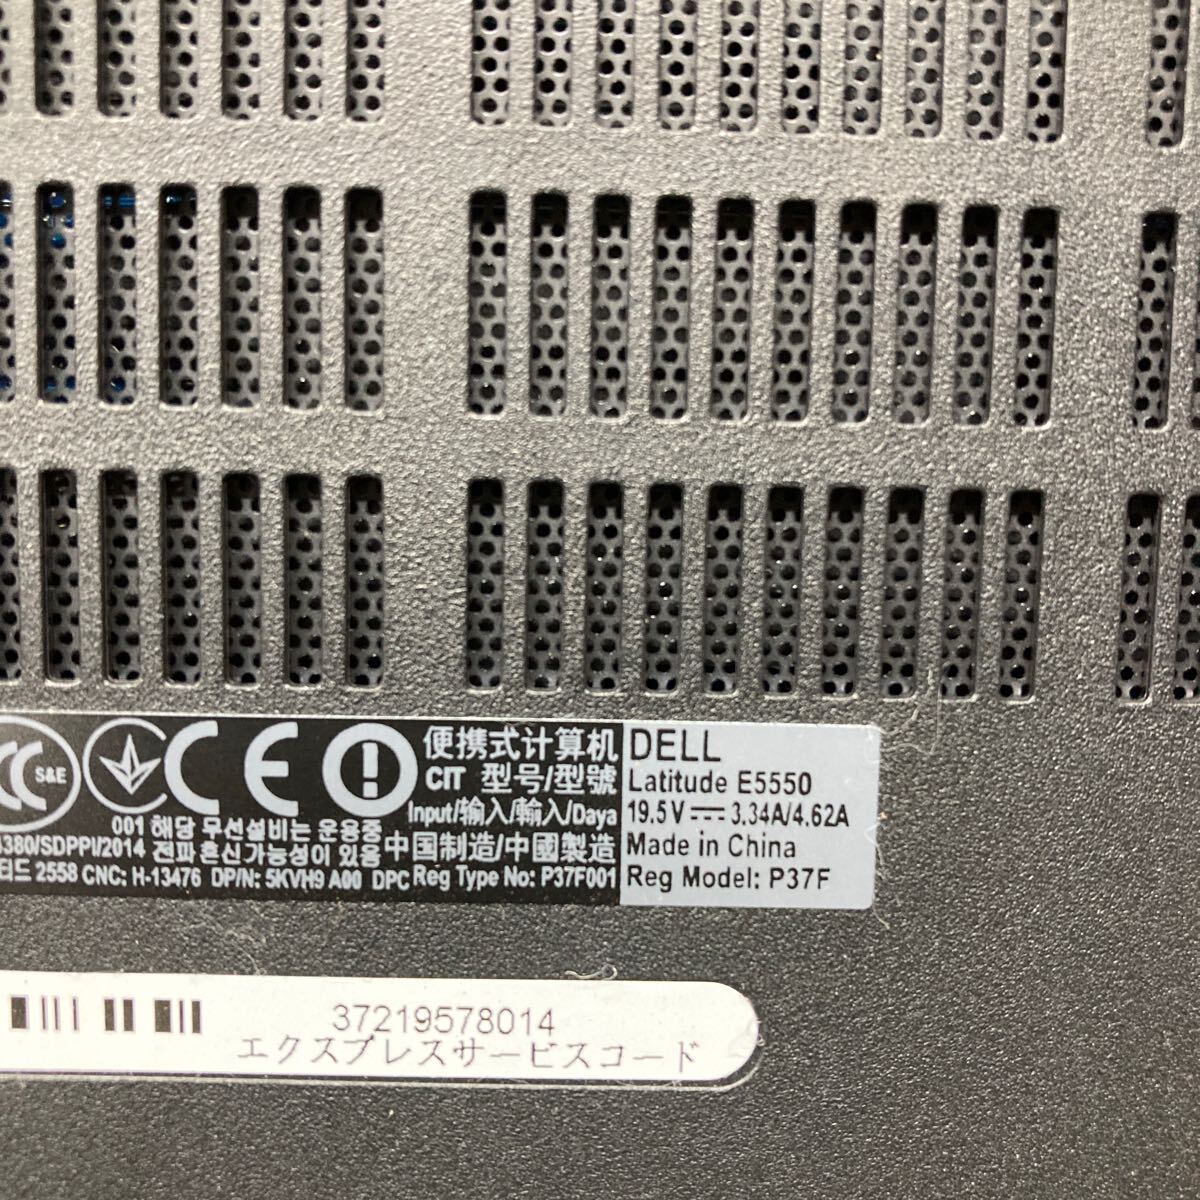 MY3-139 激安 ノートPC DELL Latitude E5550 P37F Core i5 5200U 2.20GHz バッテリー欠品 BIOS立ち上がり確認済み ジャンク_画像8